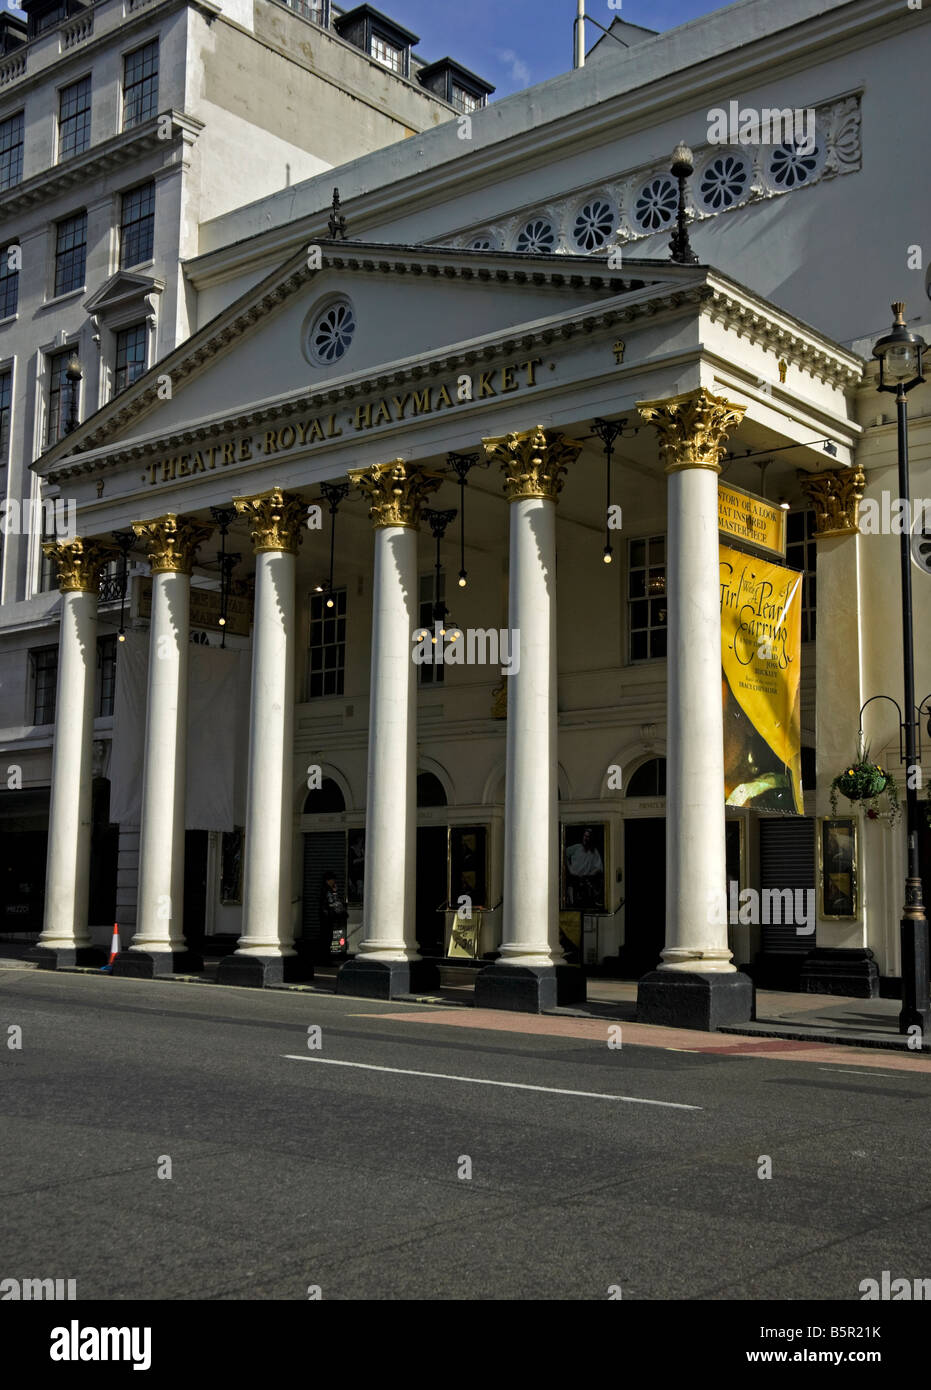 Theatre Royal Haymarket, London, England, UK, Europe Stock Photo